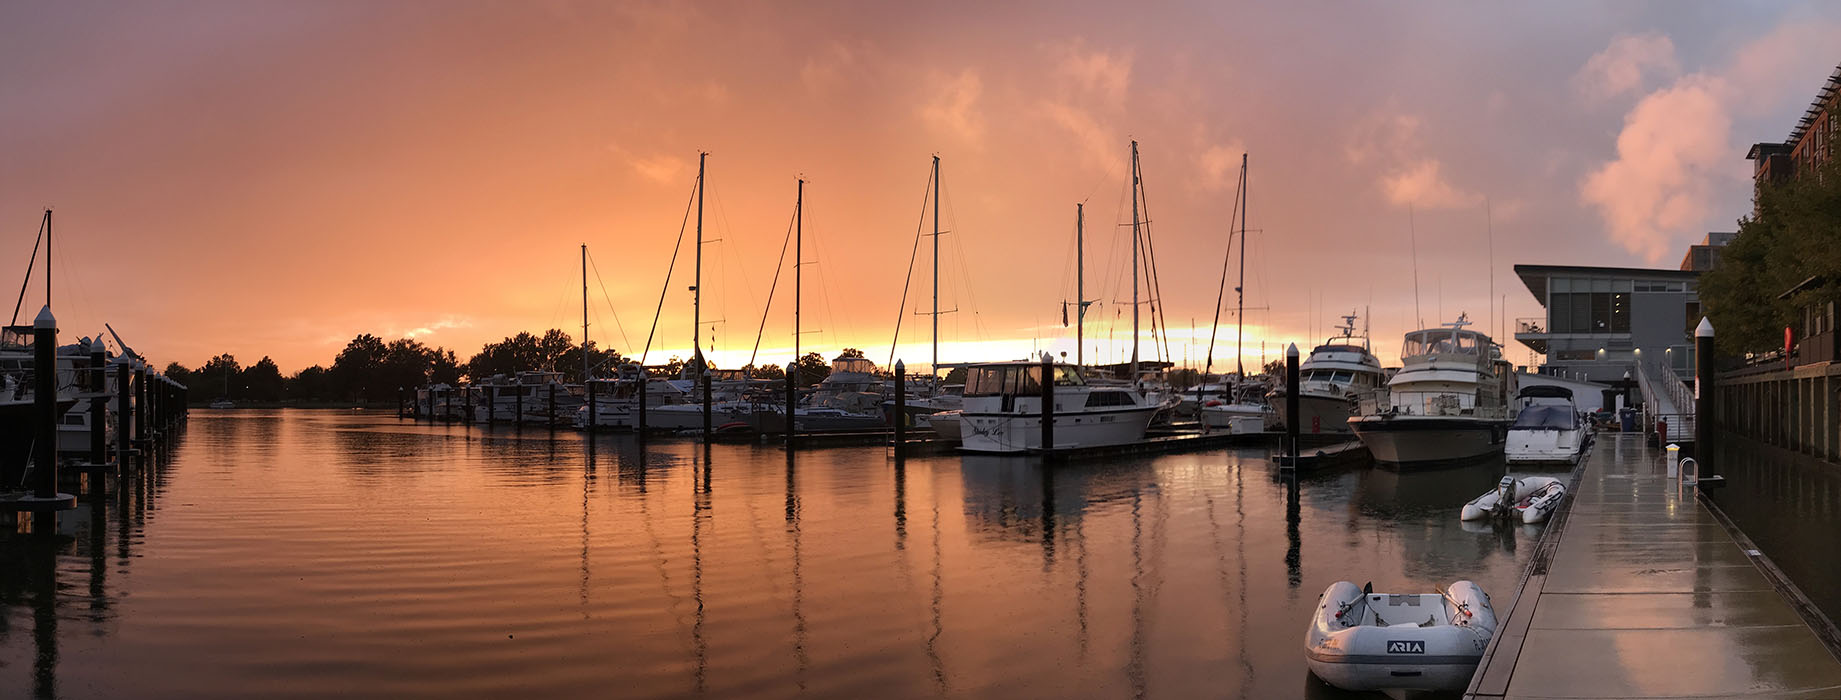 Panorama Red Sunset behind moored boats at yacht basin.